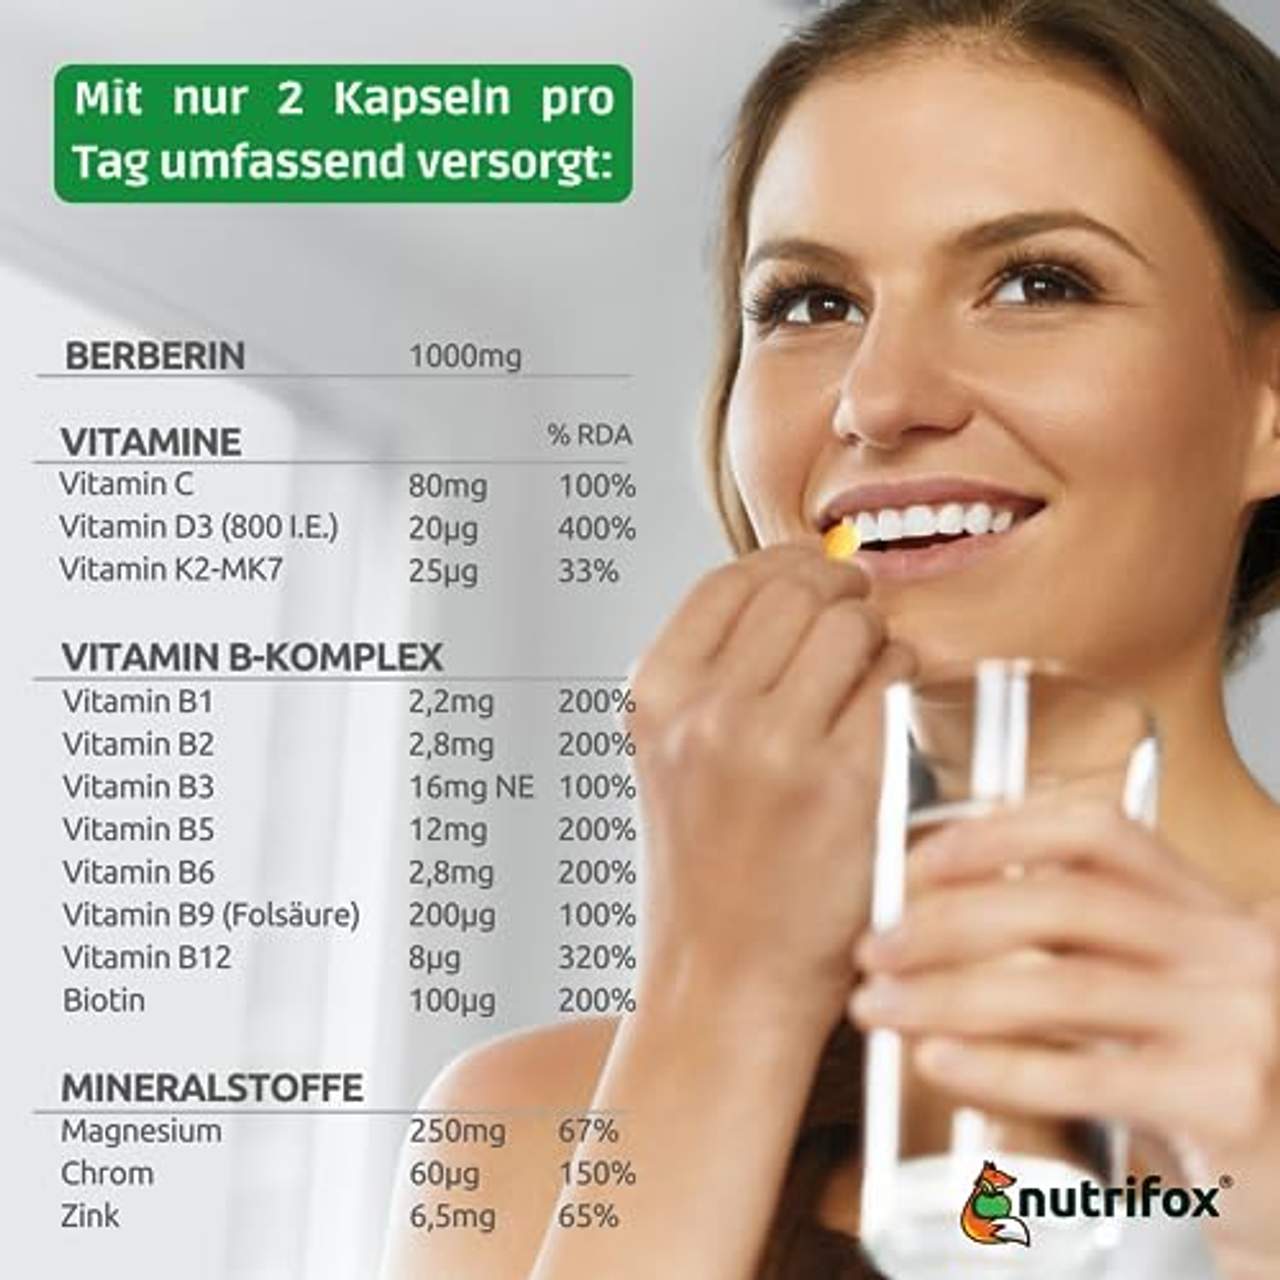 Berberin 500 mg Plus Multivitamine & Mineralstoffe